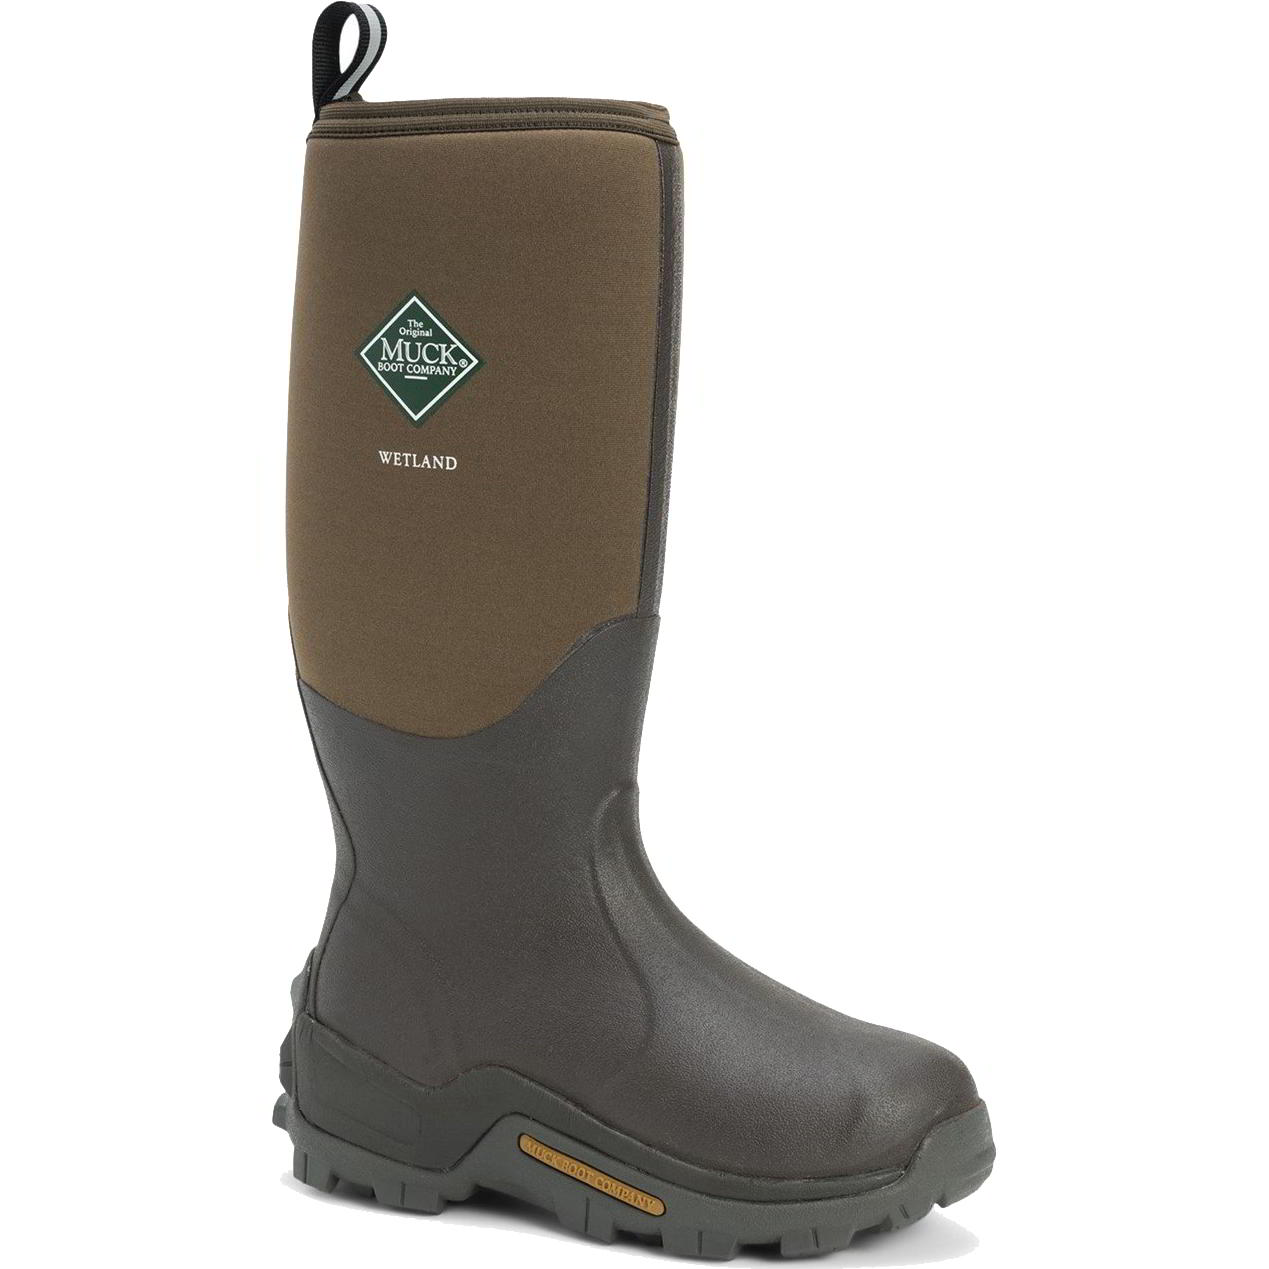 Muck Boots Mens Wellies Wetland Tall Neoprene Wellington - UK 7 Brown 2951